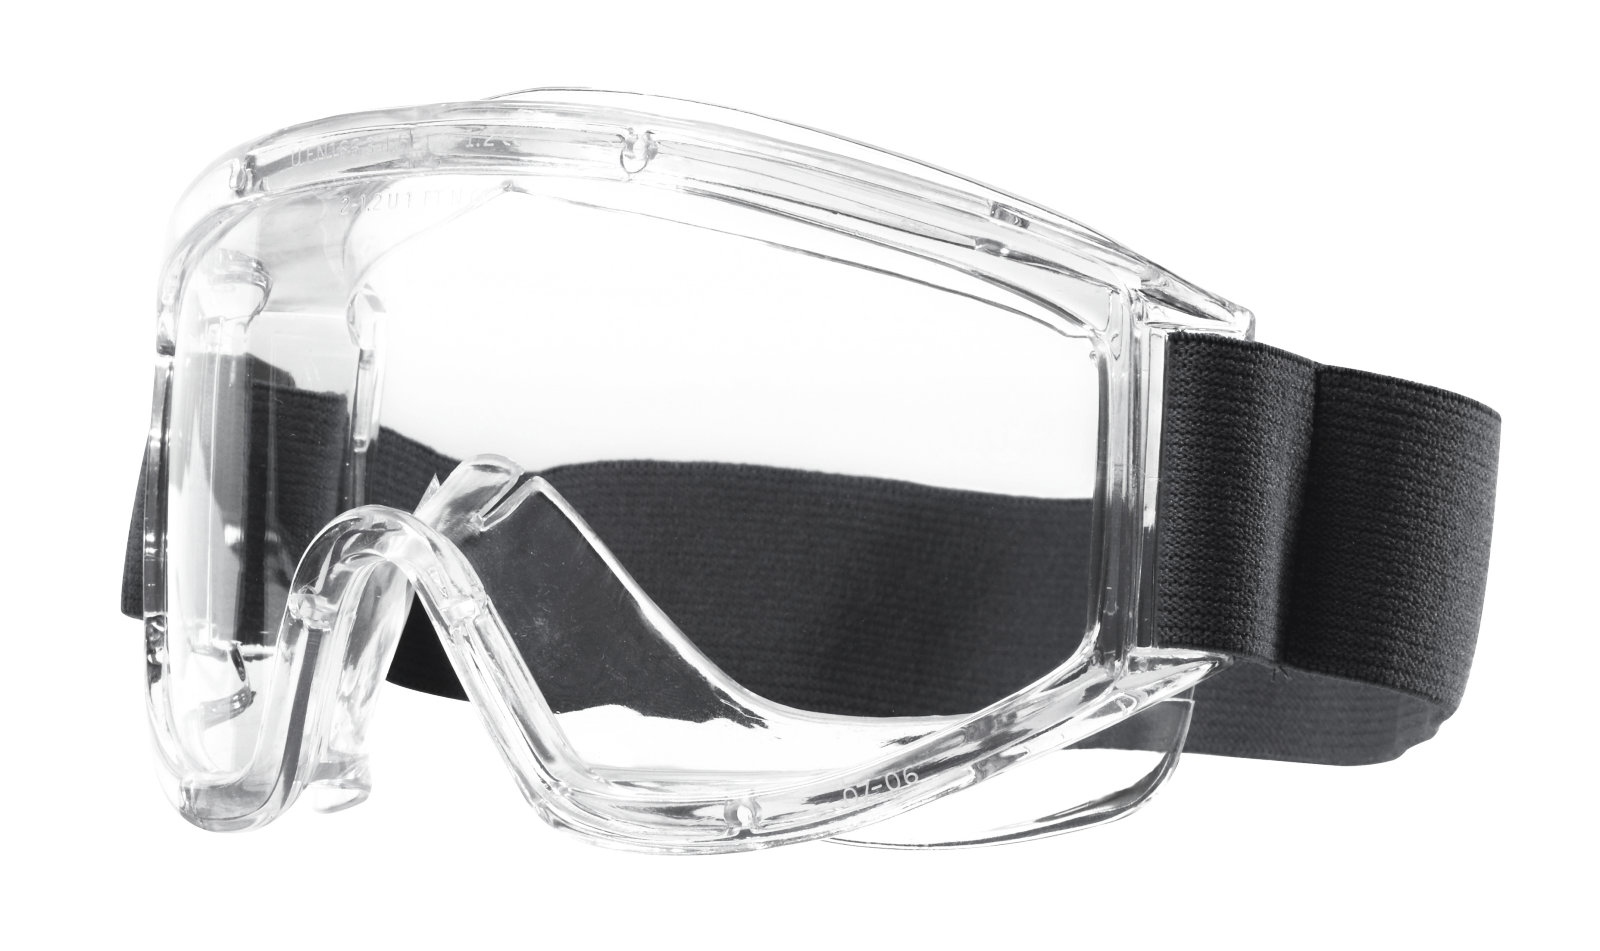 pics/Feldtmann 2016/Kopfschutz/tector/tector-4152-acetat-full-vision-safety-glasses-with-adjustable-head-band-clear.jpg